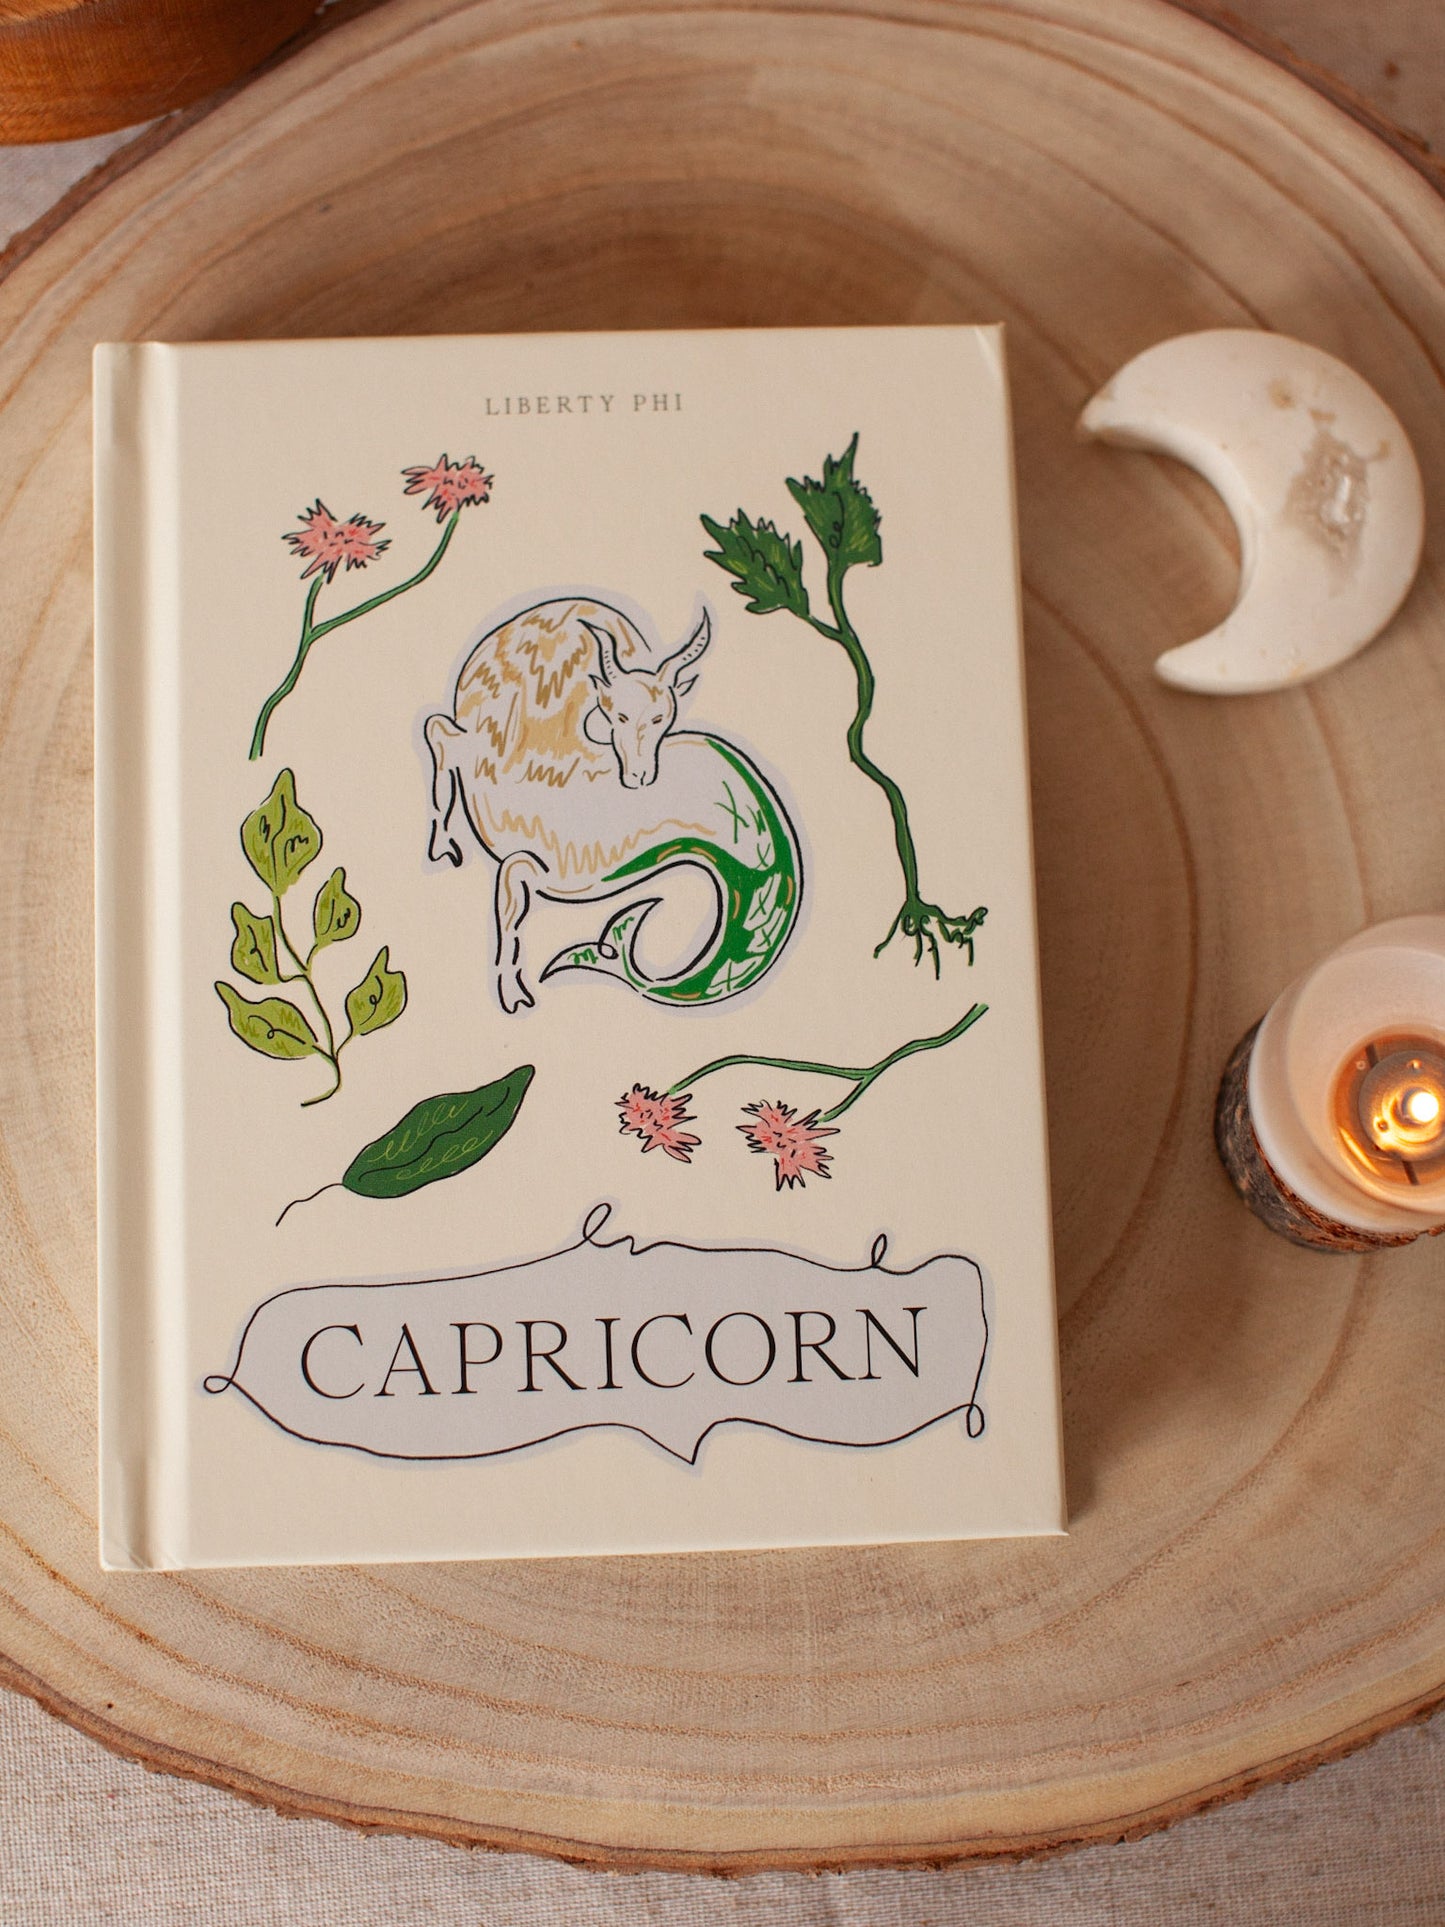 Capricorn Book by Liberty Phi